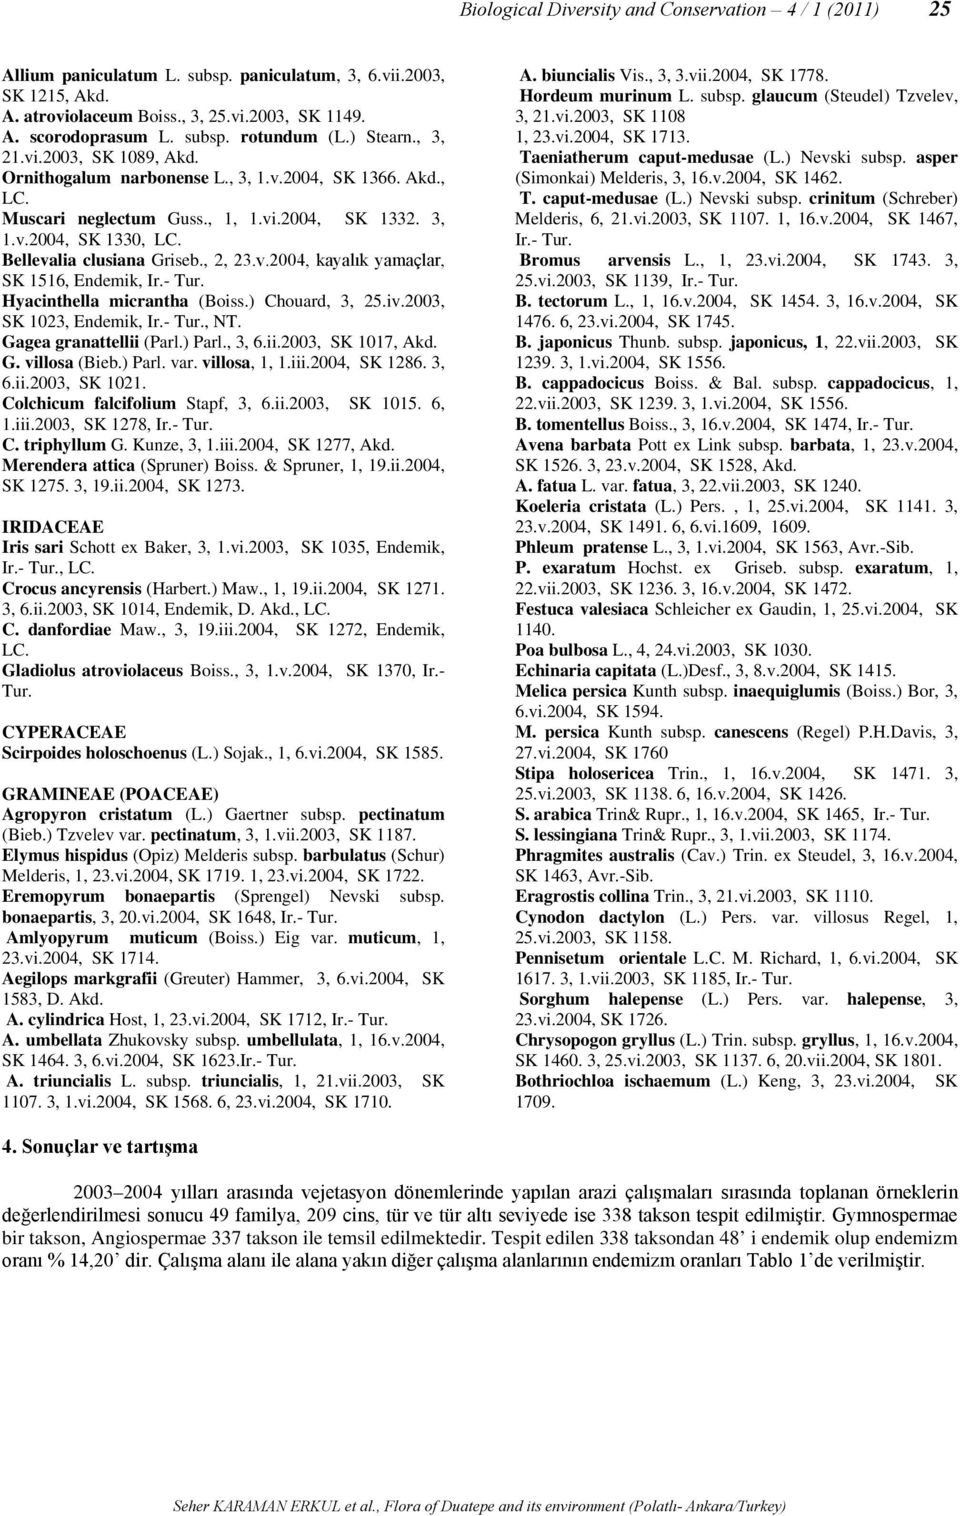 Bellevalia clusiana Griseb., 2, 23.v.2004, kayalık yamaçlar, SK 1516, Endemik, Ir.- Hyacinthella micrantha (Boiss.) Chouard, 3, 25.iv.2003, SK 1023, Endemik, Ir.-, NT. Gagea granattellii (Parl.) Parl.